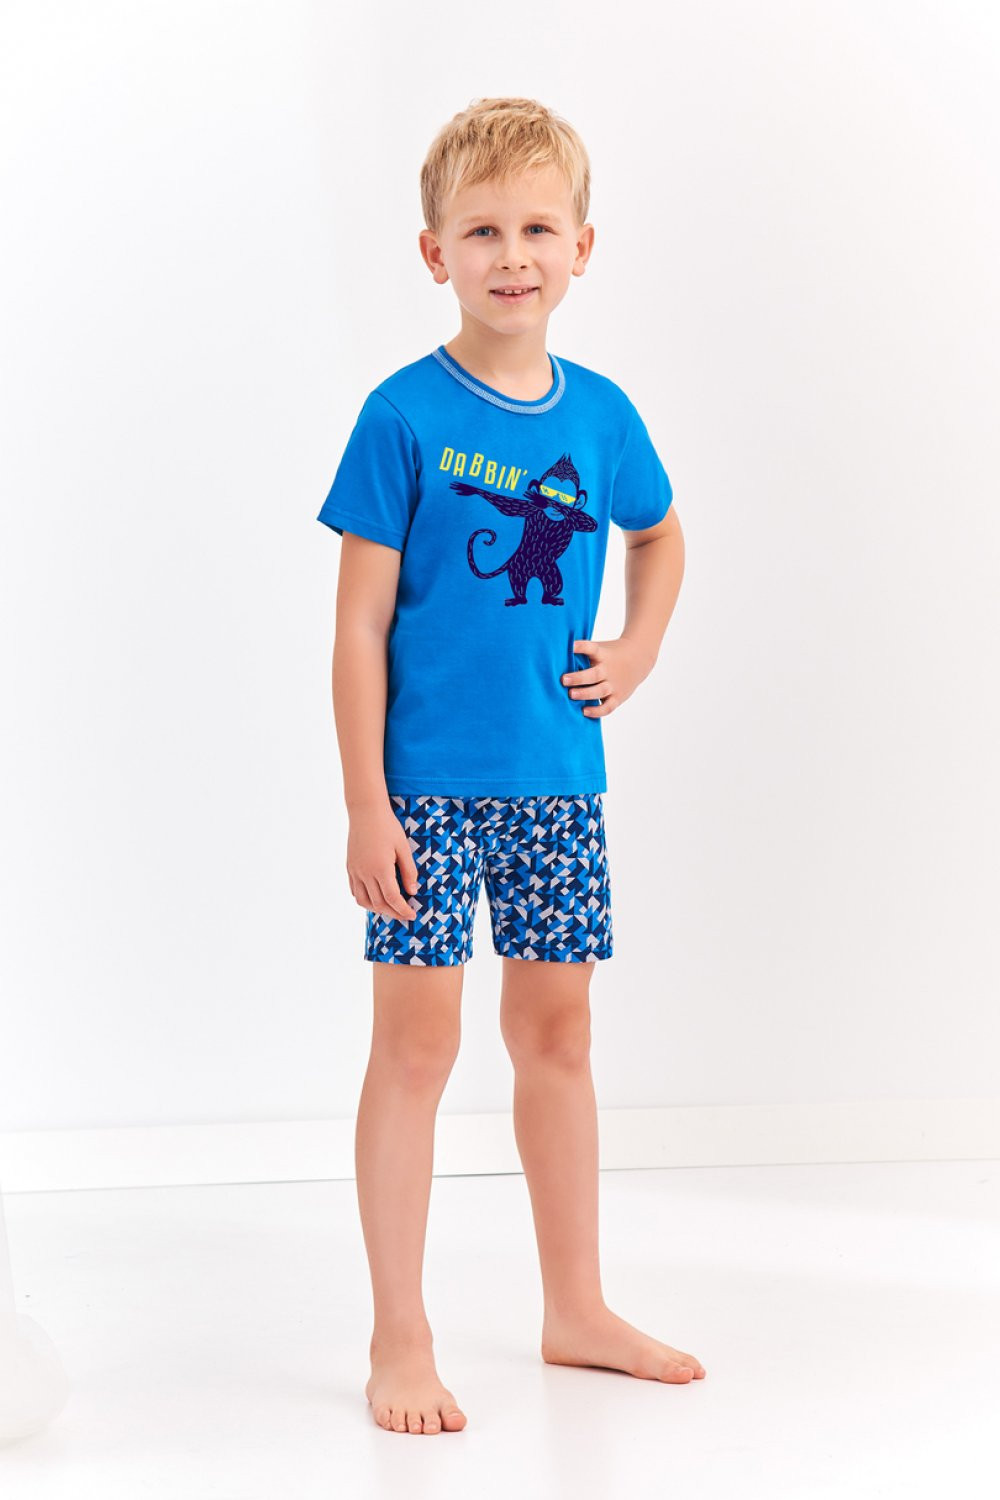 Chlapecké pyžamo 944 Damian - TARO tmavě modrá 134